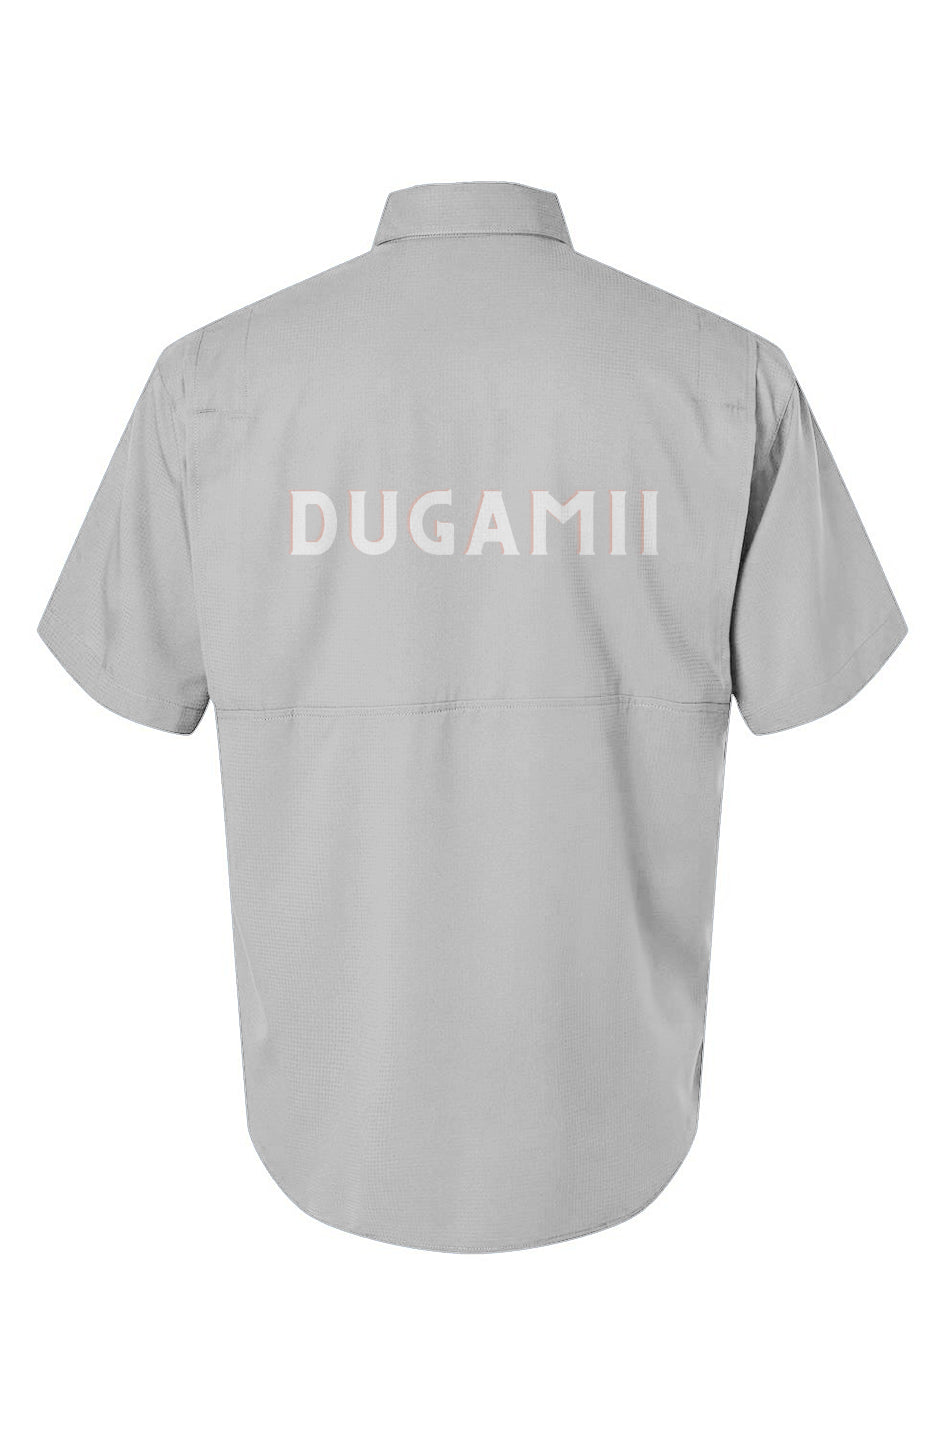 Men's DuGamii Aluminum Lightweight Fishing Shirt